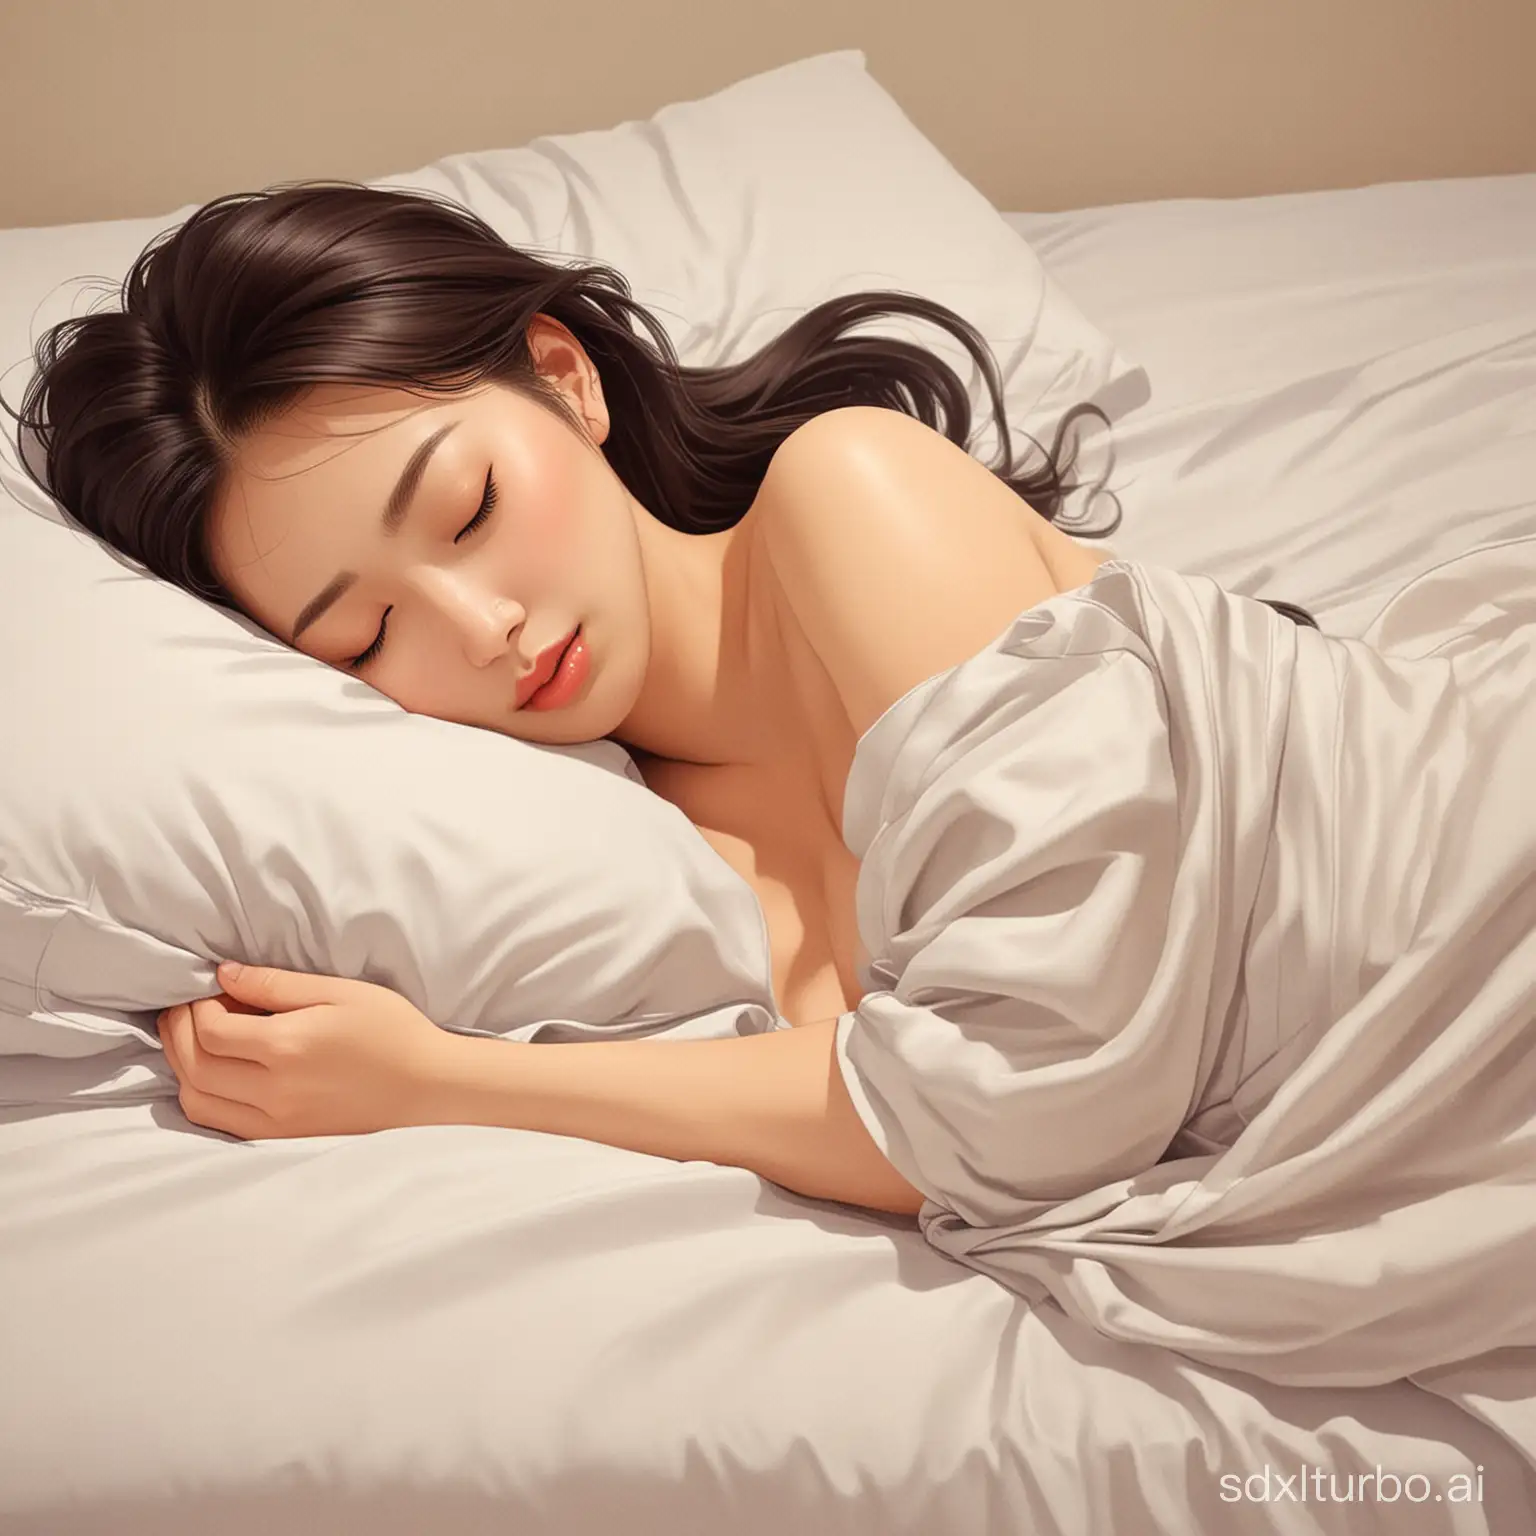 Cute-Cartoon-Asian-Women-Sleeping-in-Peaceful-Slumber